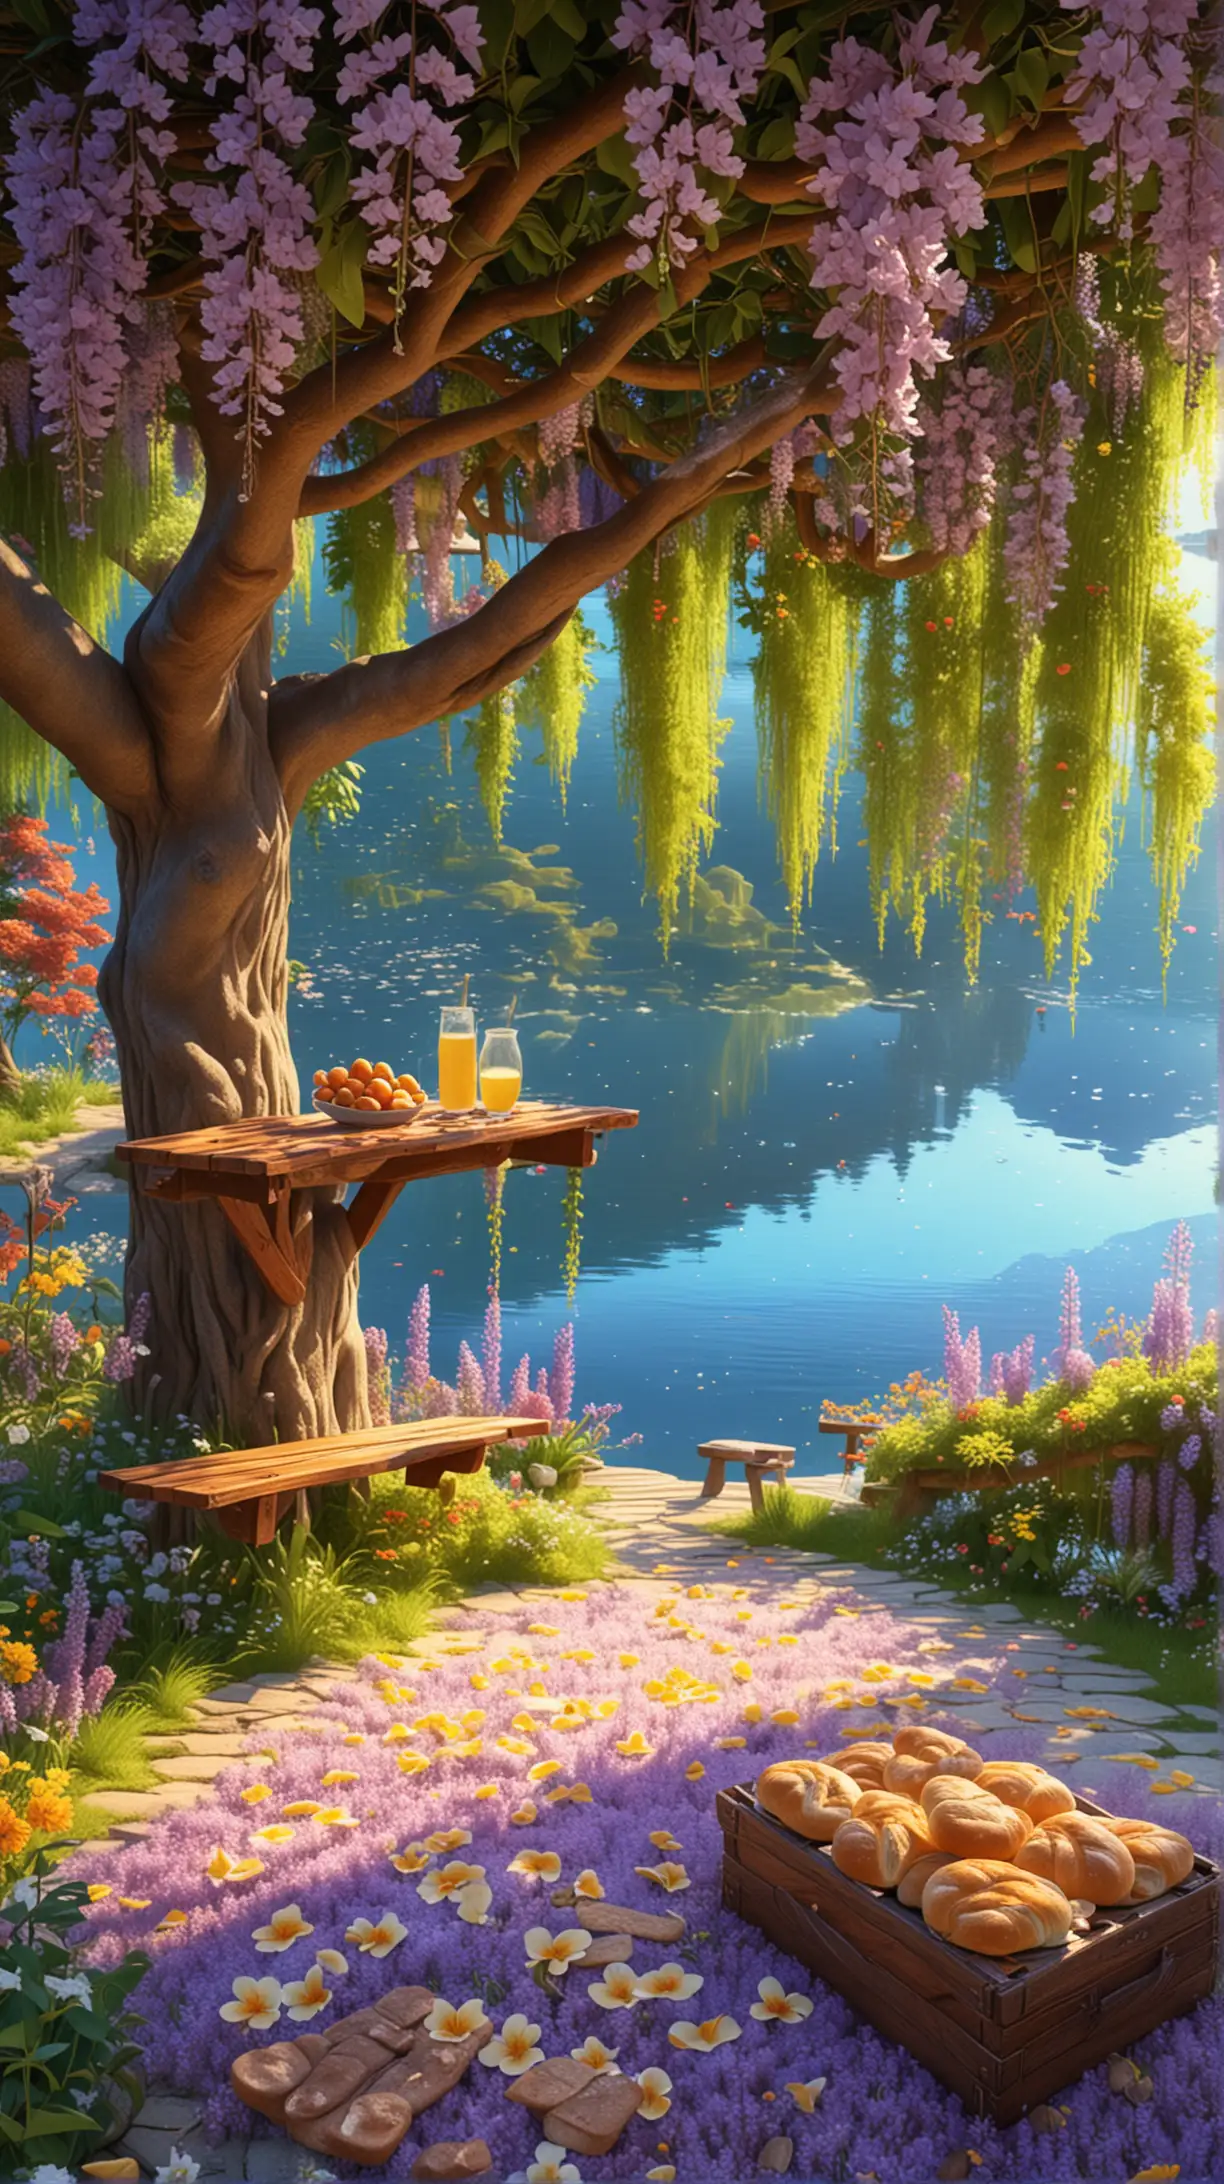 Whimsical Ghibli Garden Picnic by the Shining Lake